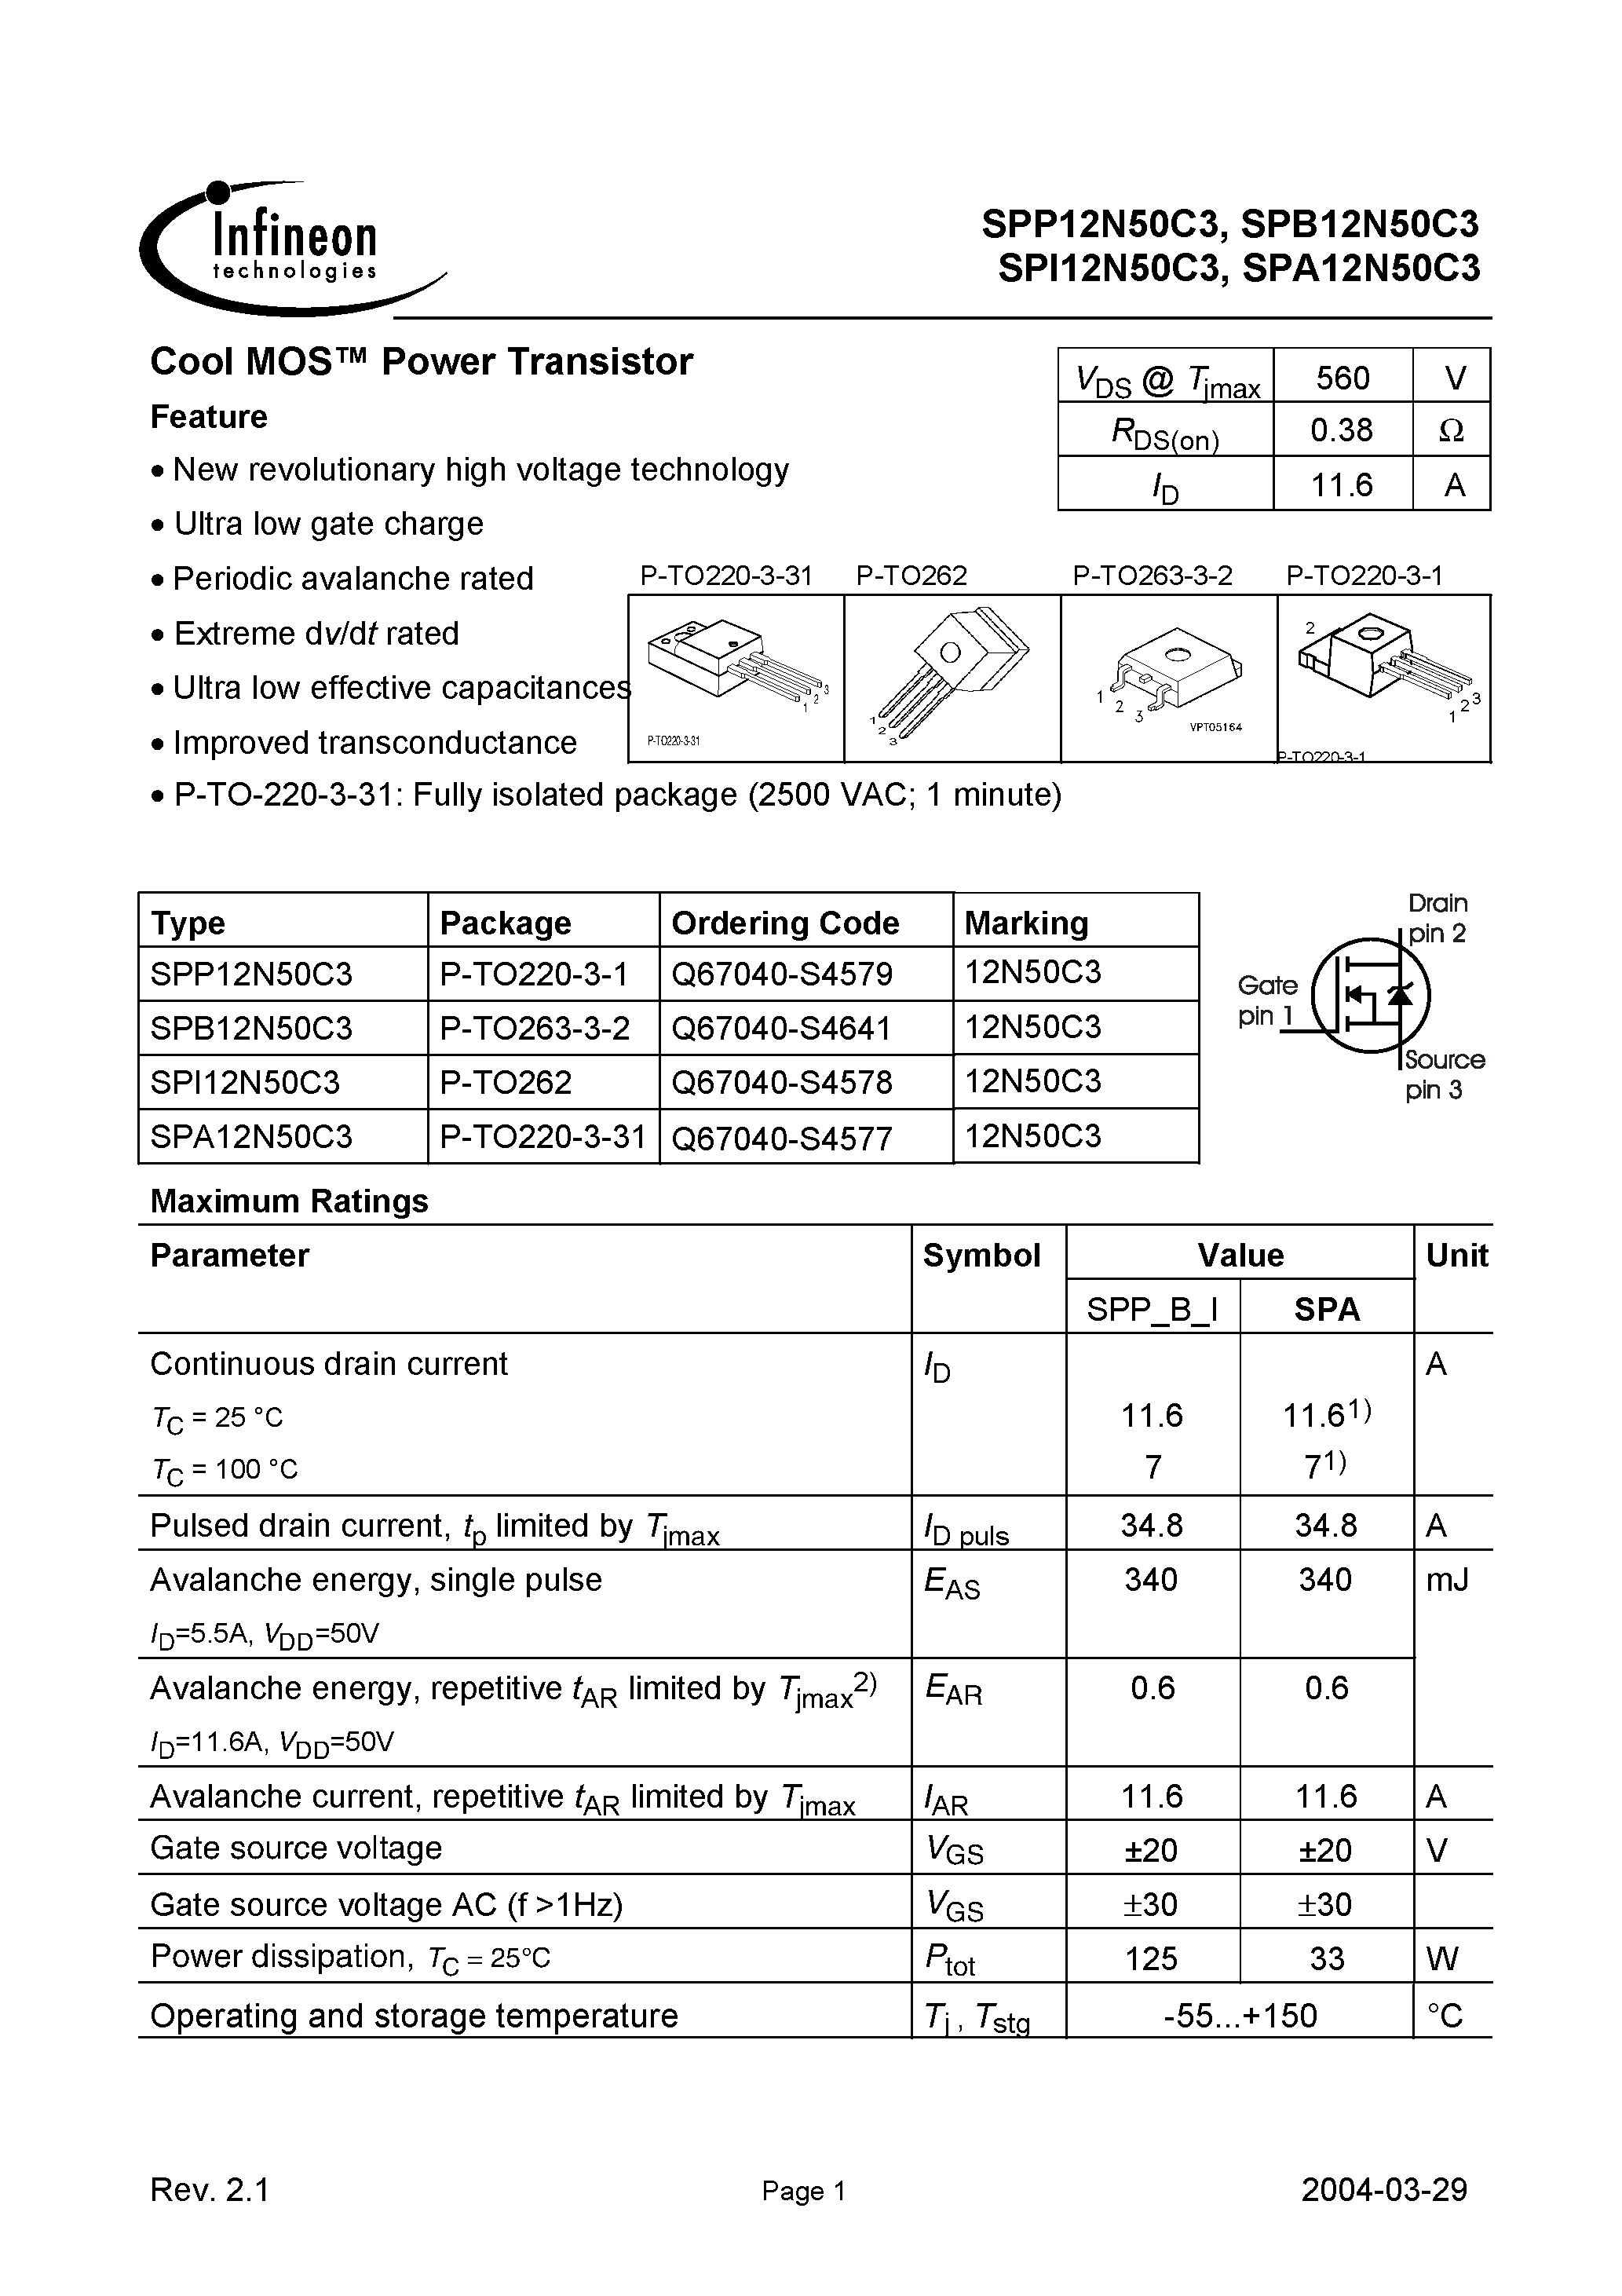 Даташит SPI12N50C3 - Cool MOS Power Transistor страница 1